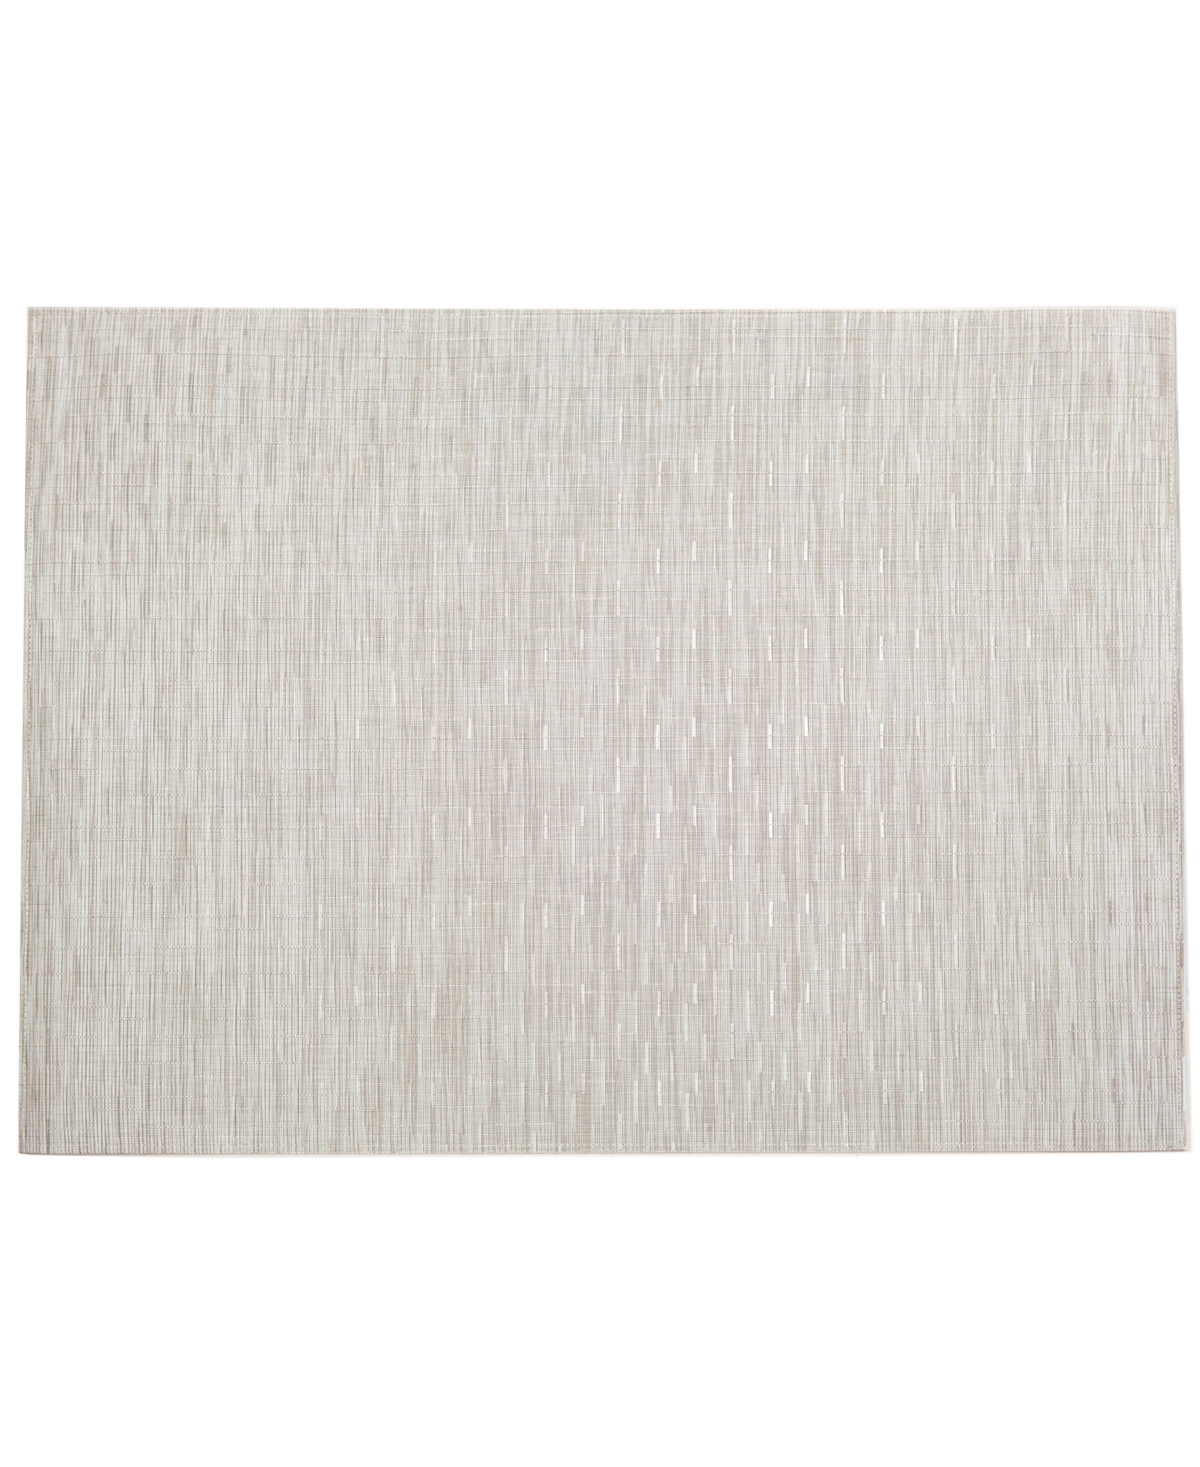 Bamboo Floormat, 23" x 36" - Coconut